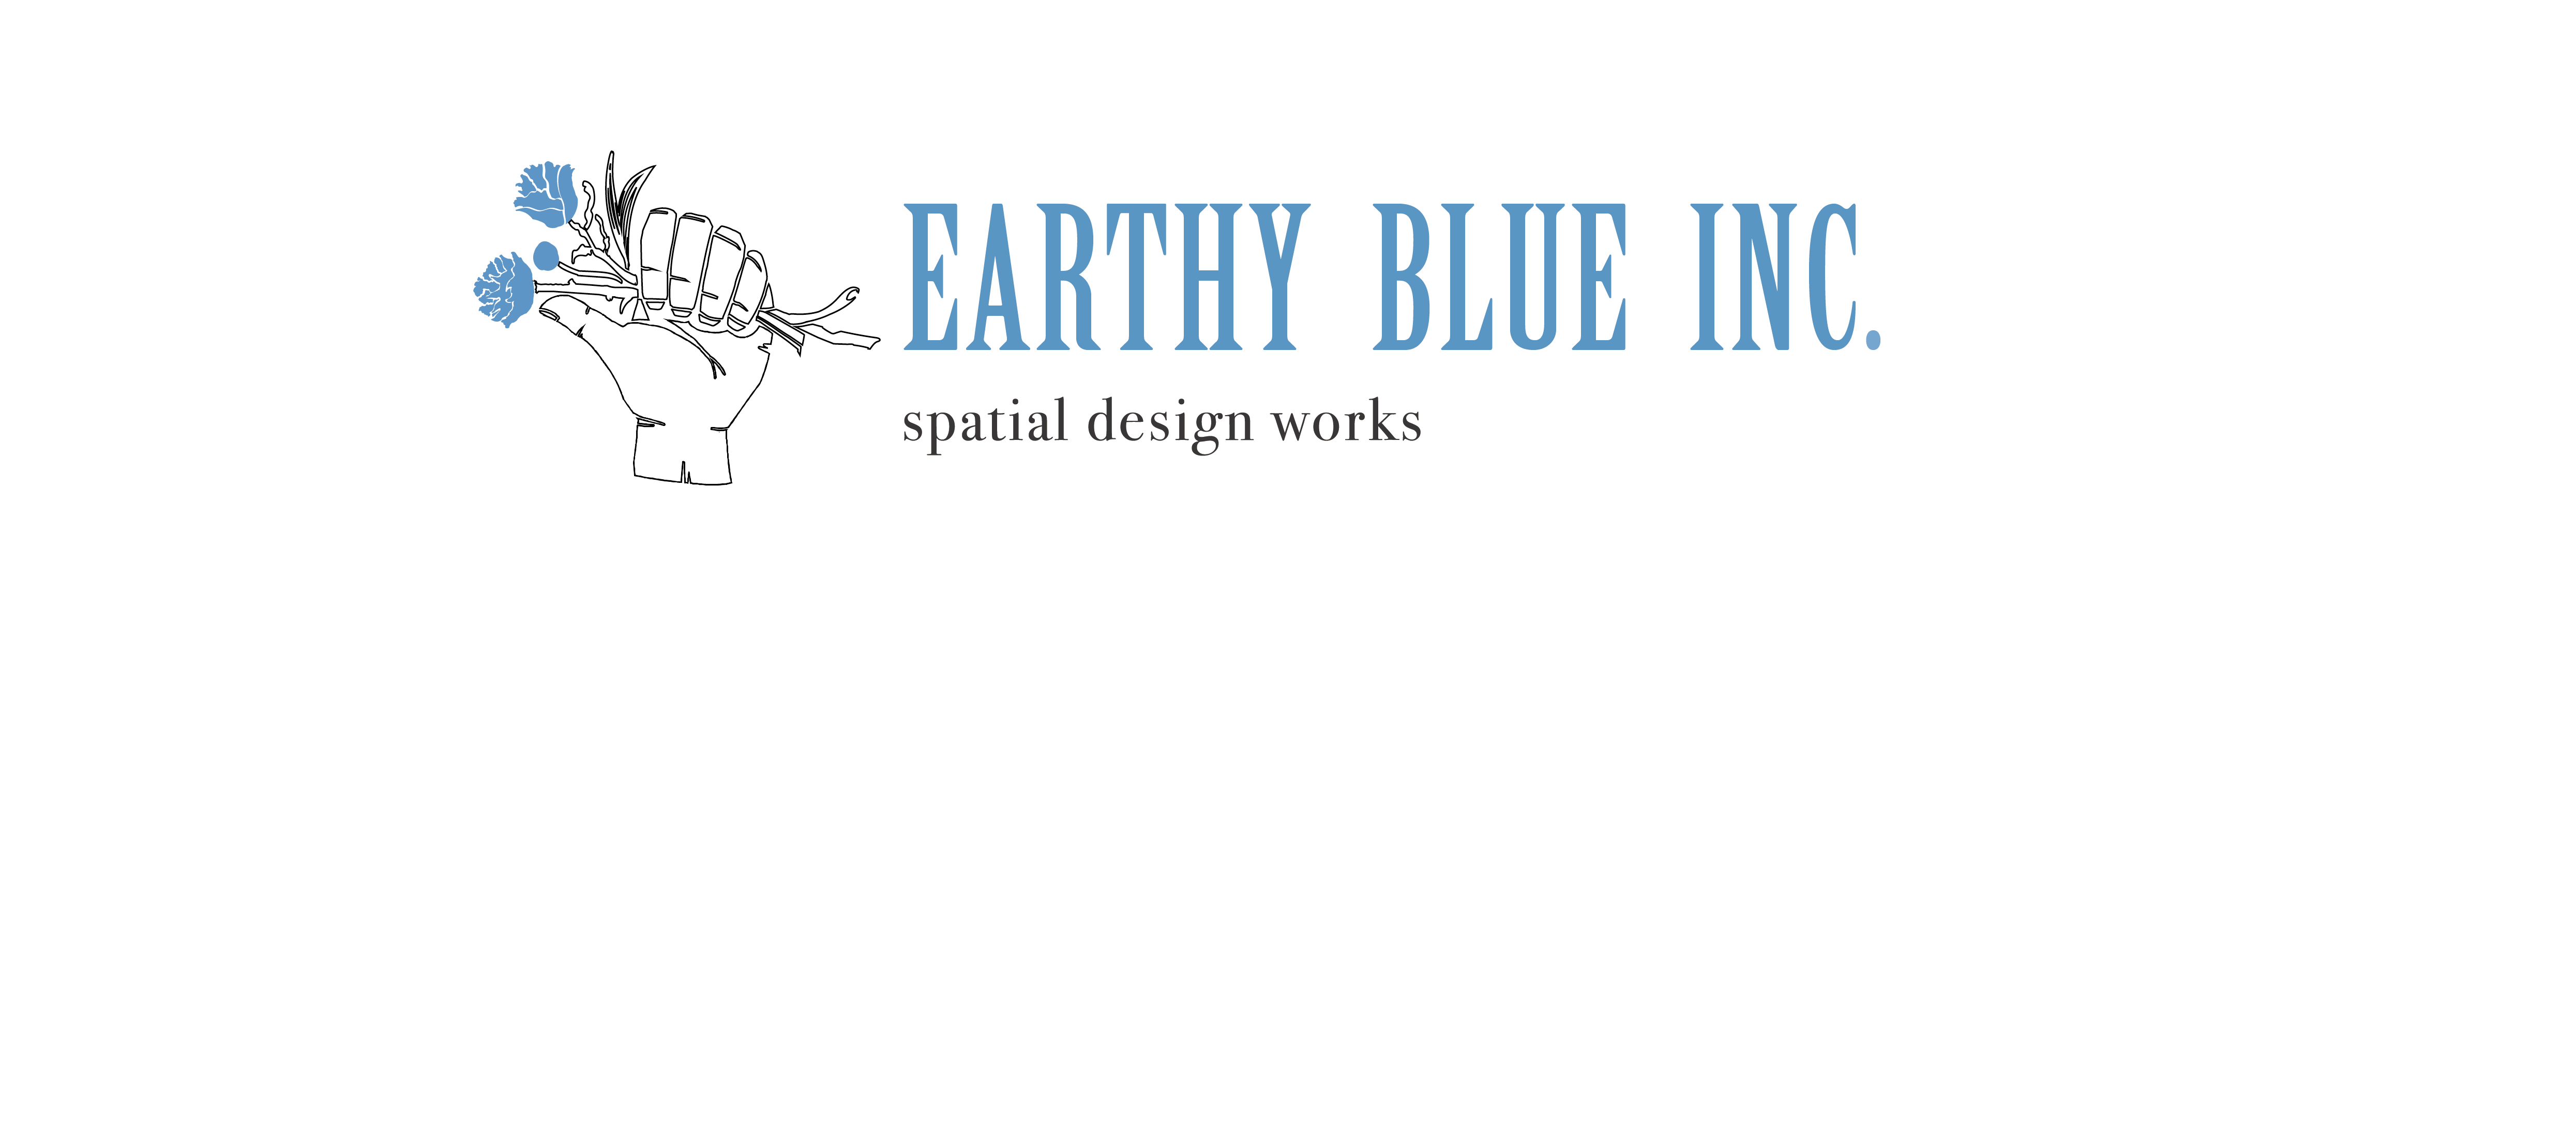 EARTHY BLUE INC